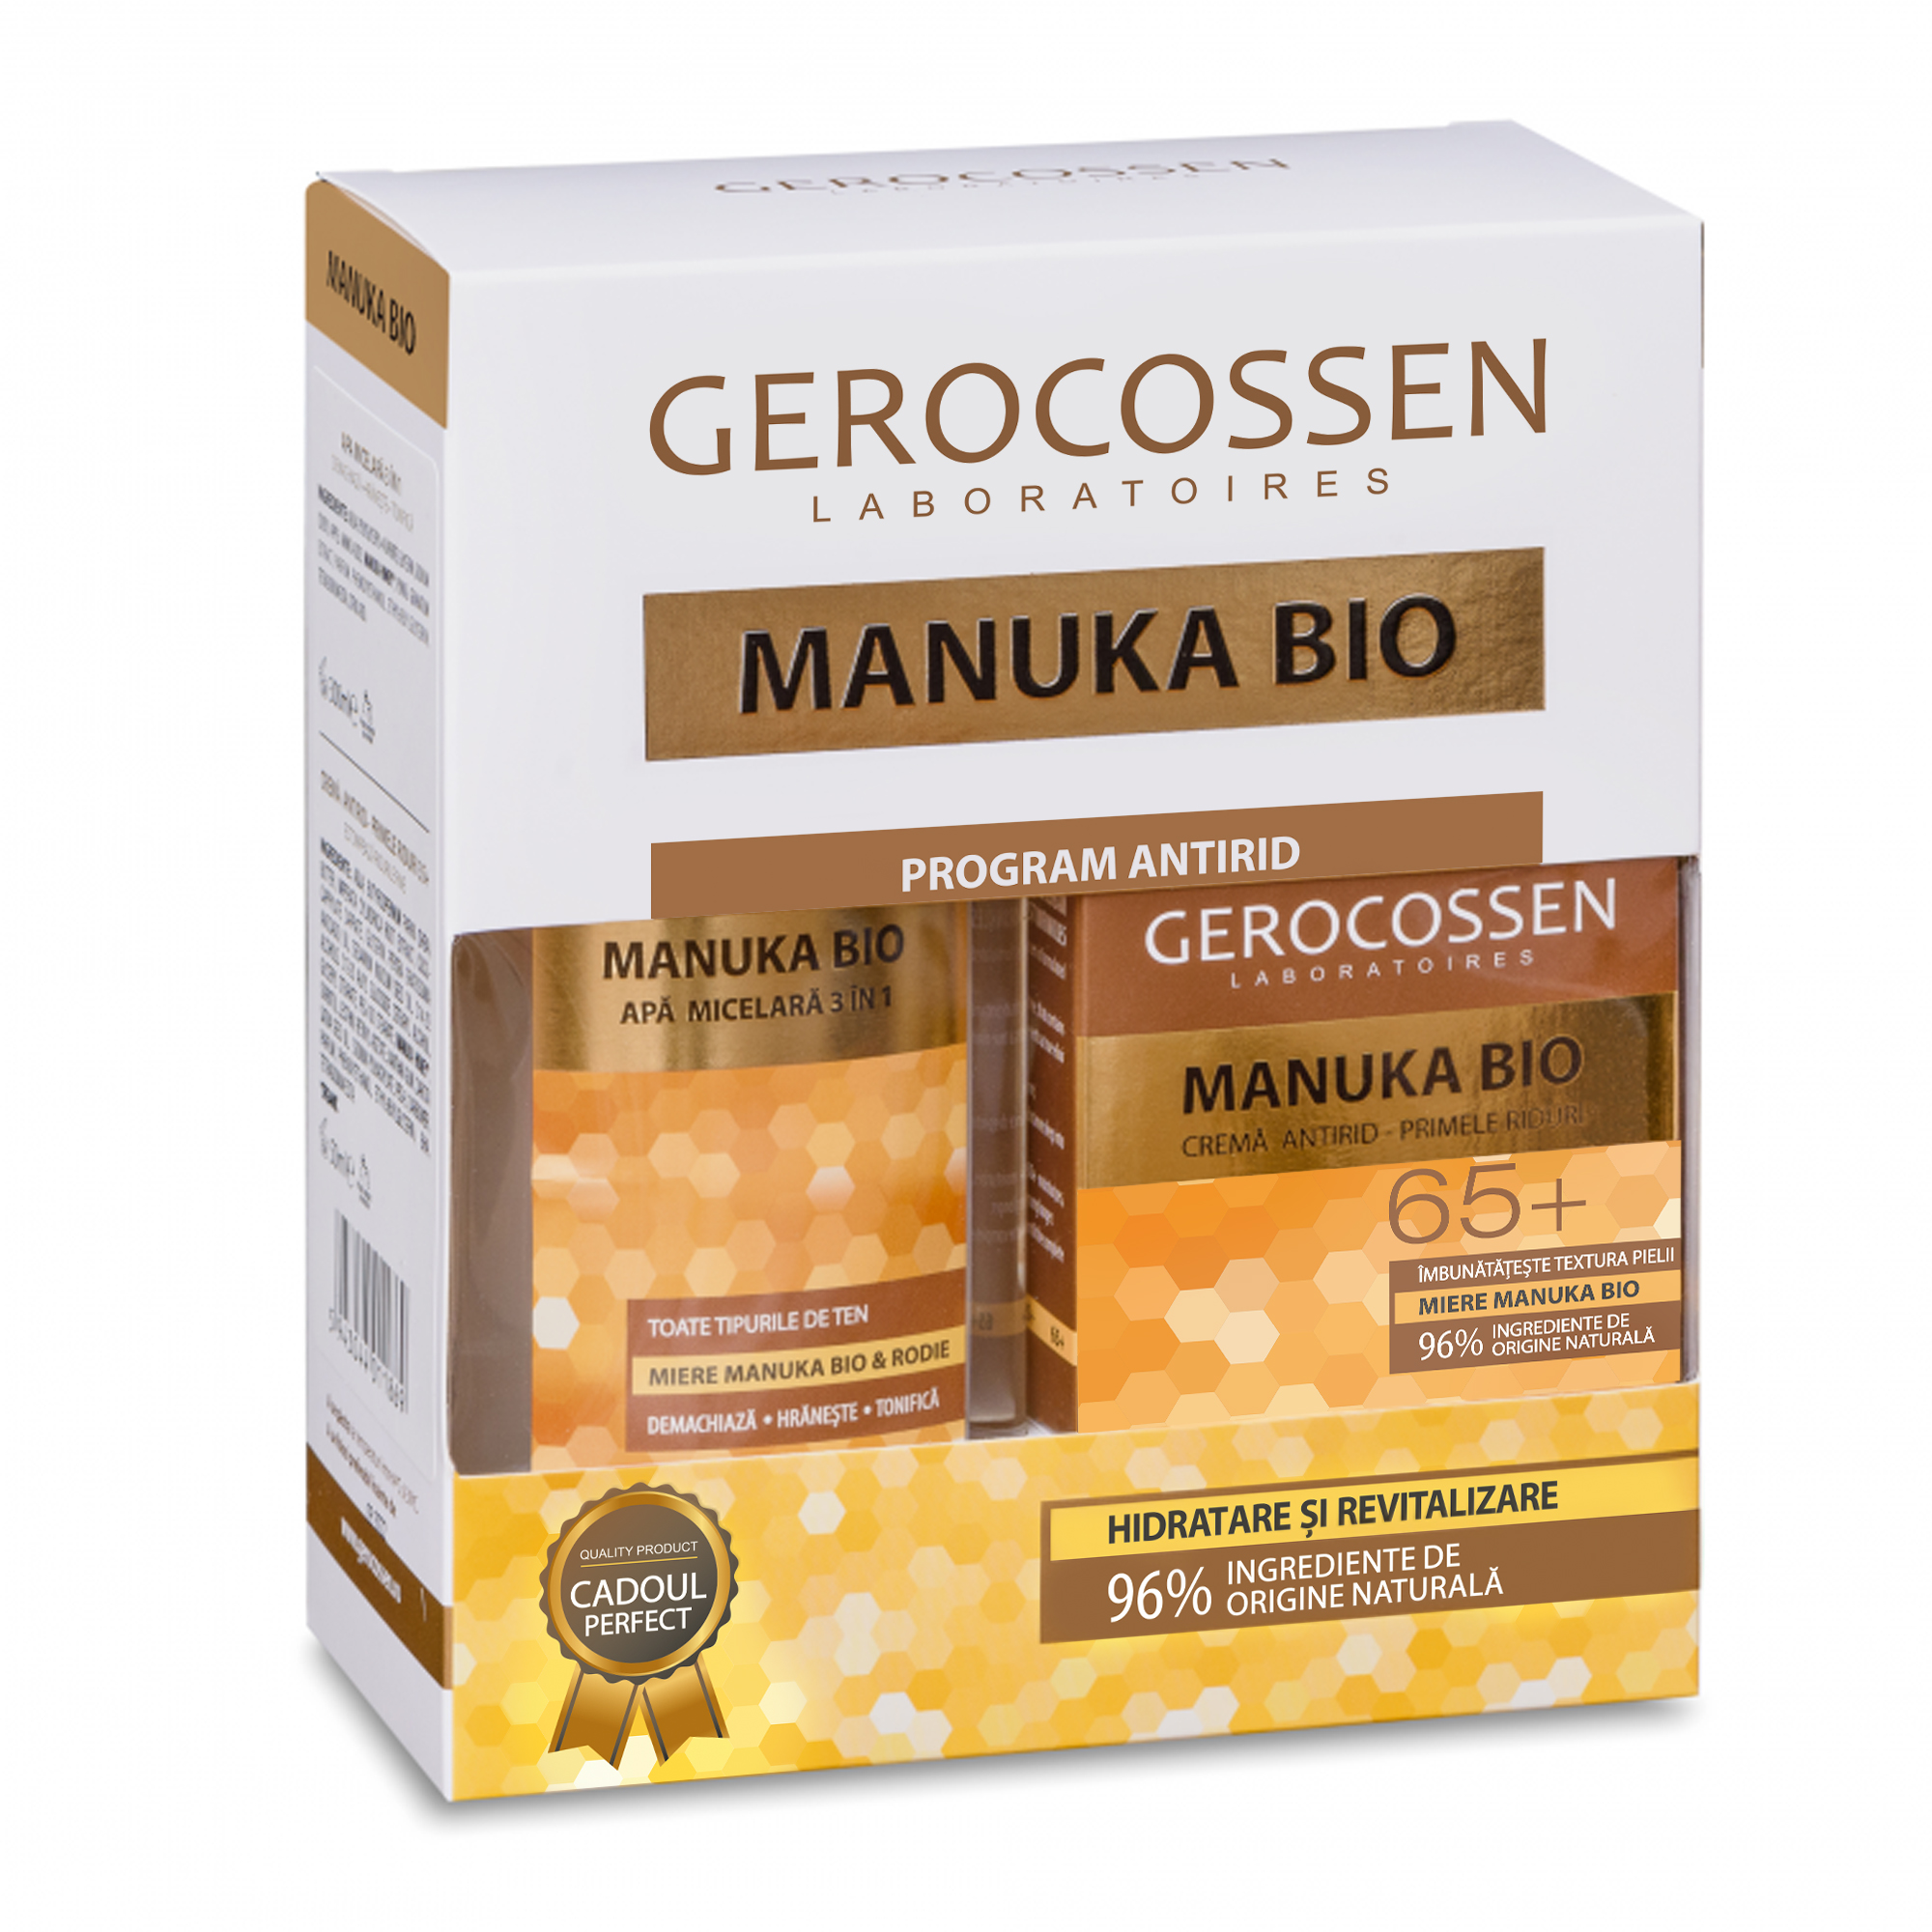 Pachet Crema antirid reparatoare +65, 50 ml + Apa micelara 300 ml Manuka Bio, Gerocossen